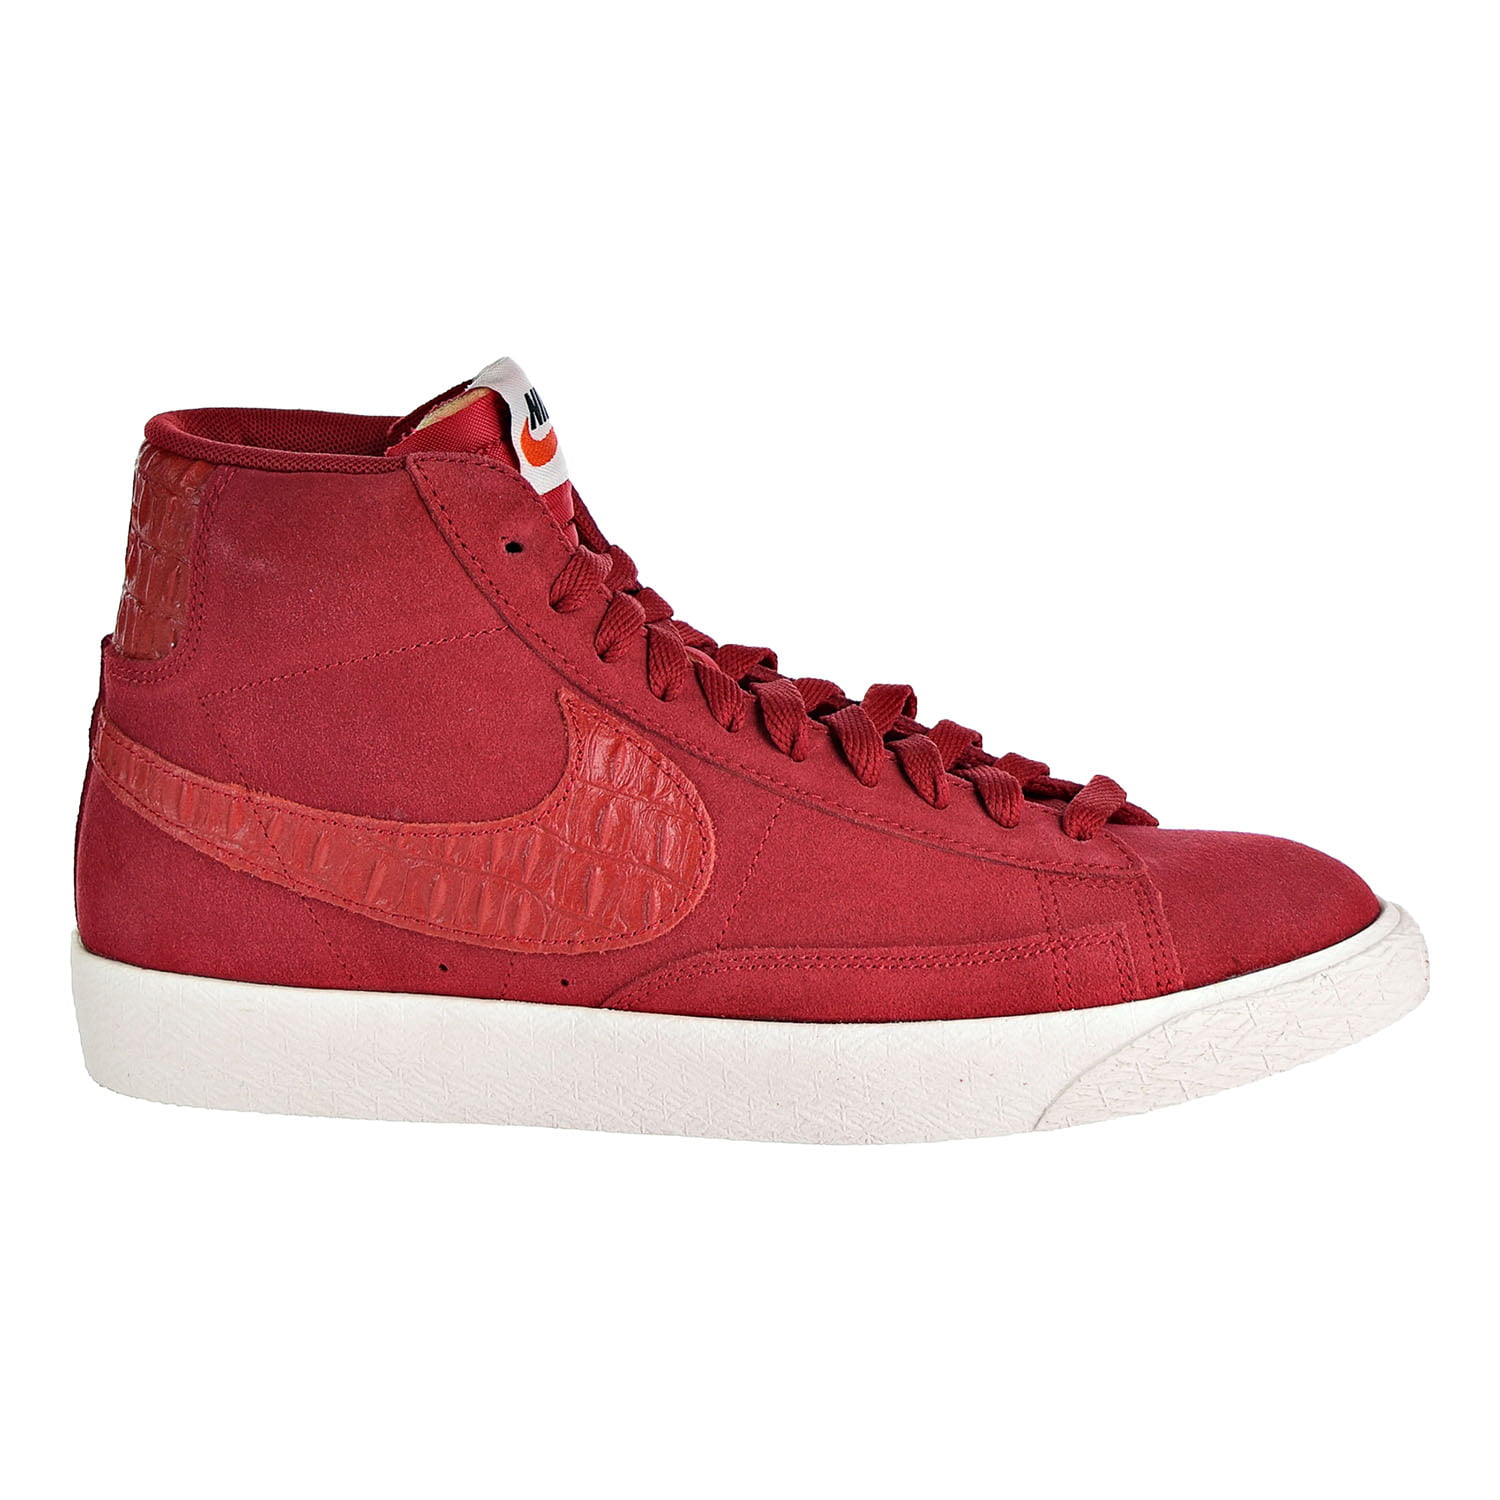 ondergoed Maand Vertrappen Nike Blazer Mid Premium Vintage Men's Sneakers Shoes Gym Red 638261-601 -  Walmart.com